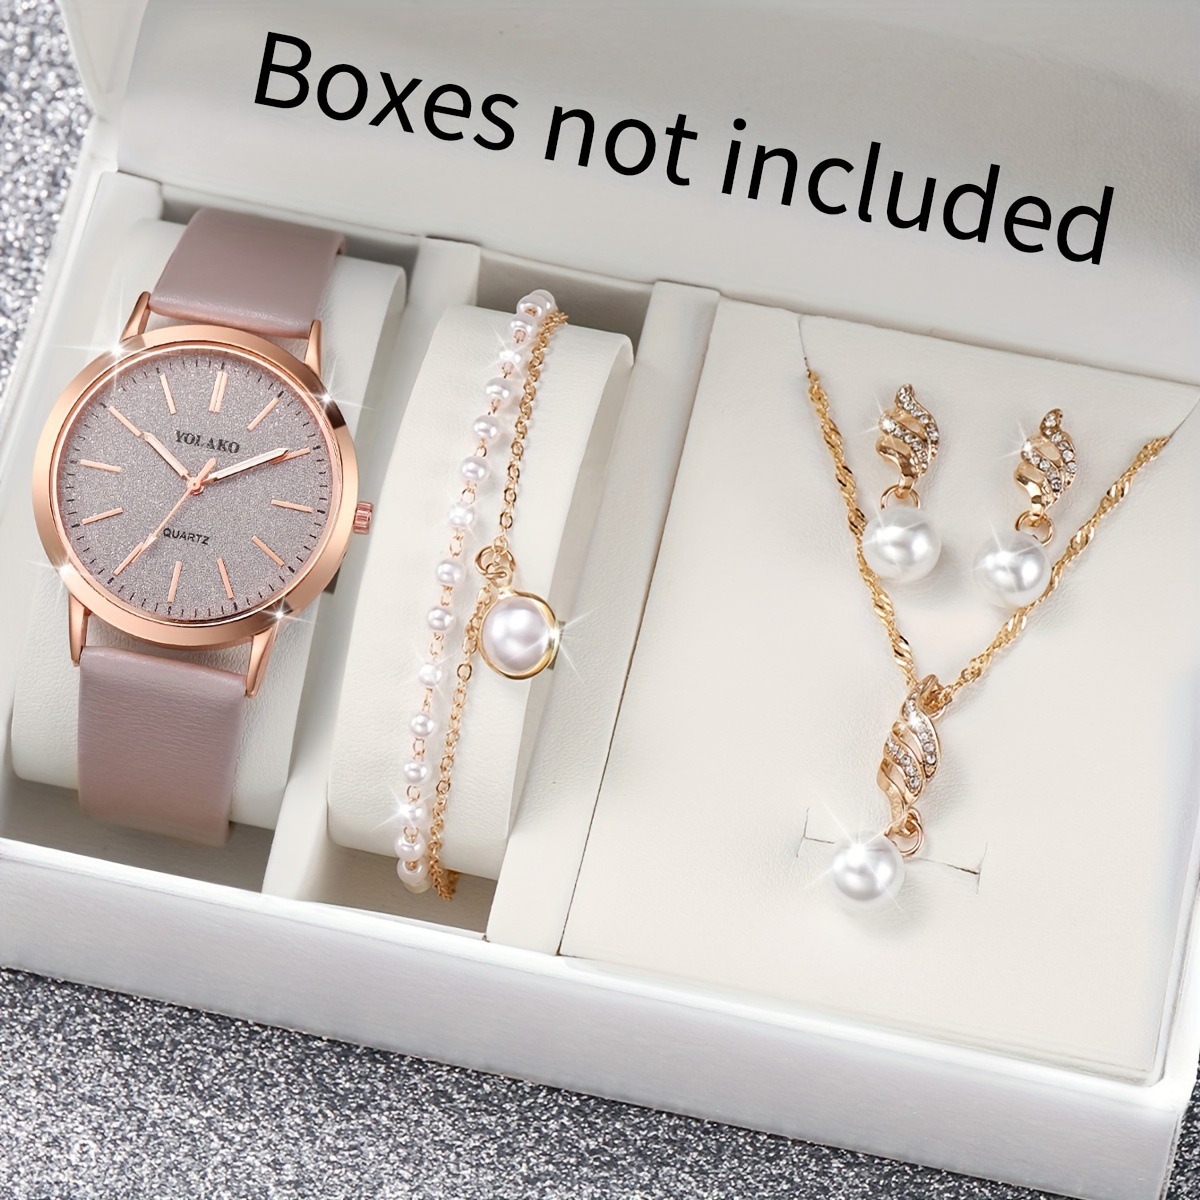 

5pcs/set Women's Shiny Rhinestone Quartz Watch Analog Pu Leather Wrist Watch & Faux Pearl Jewelry Set, Gift For Mom Her